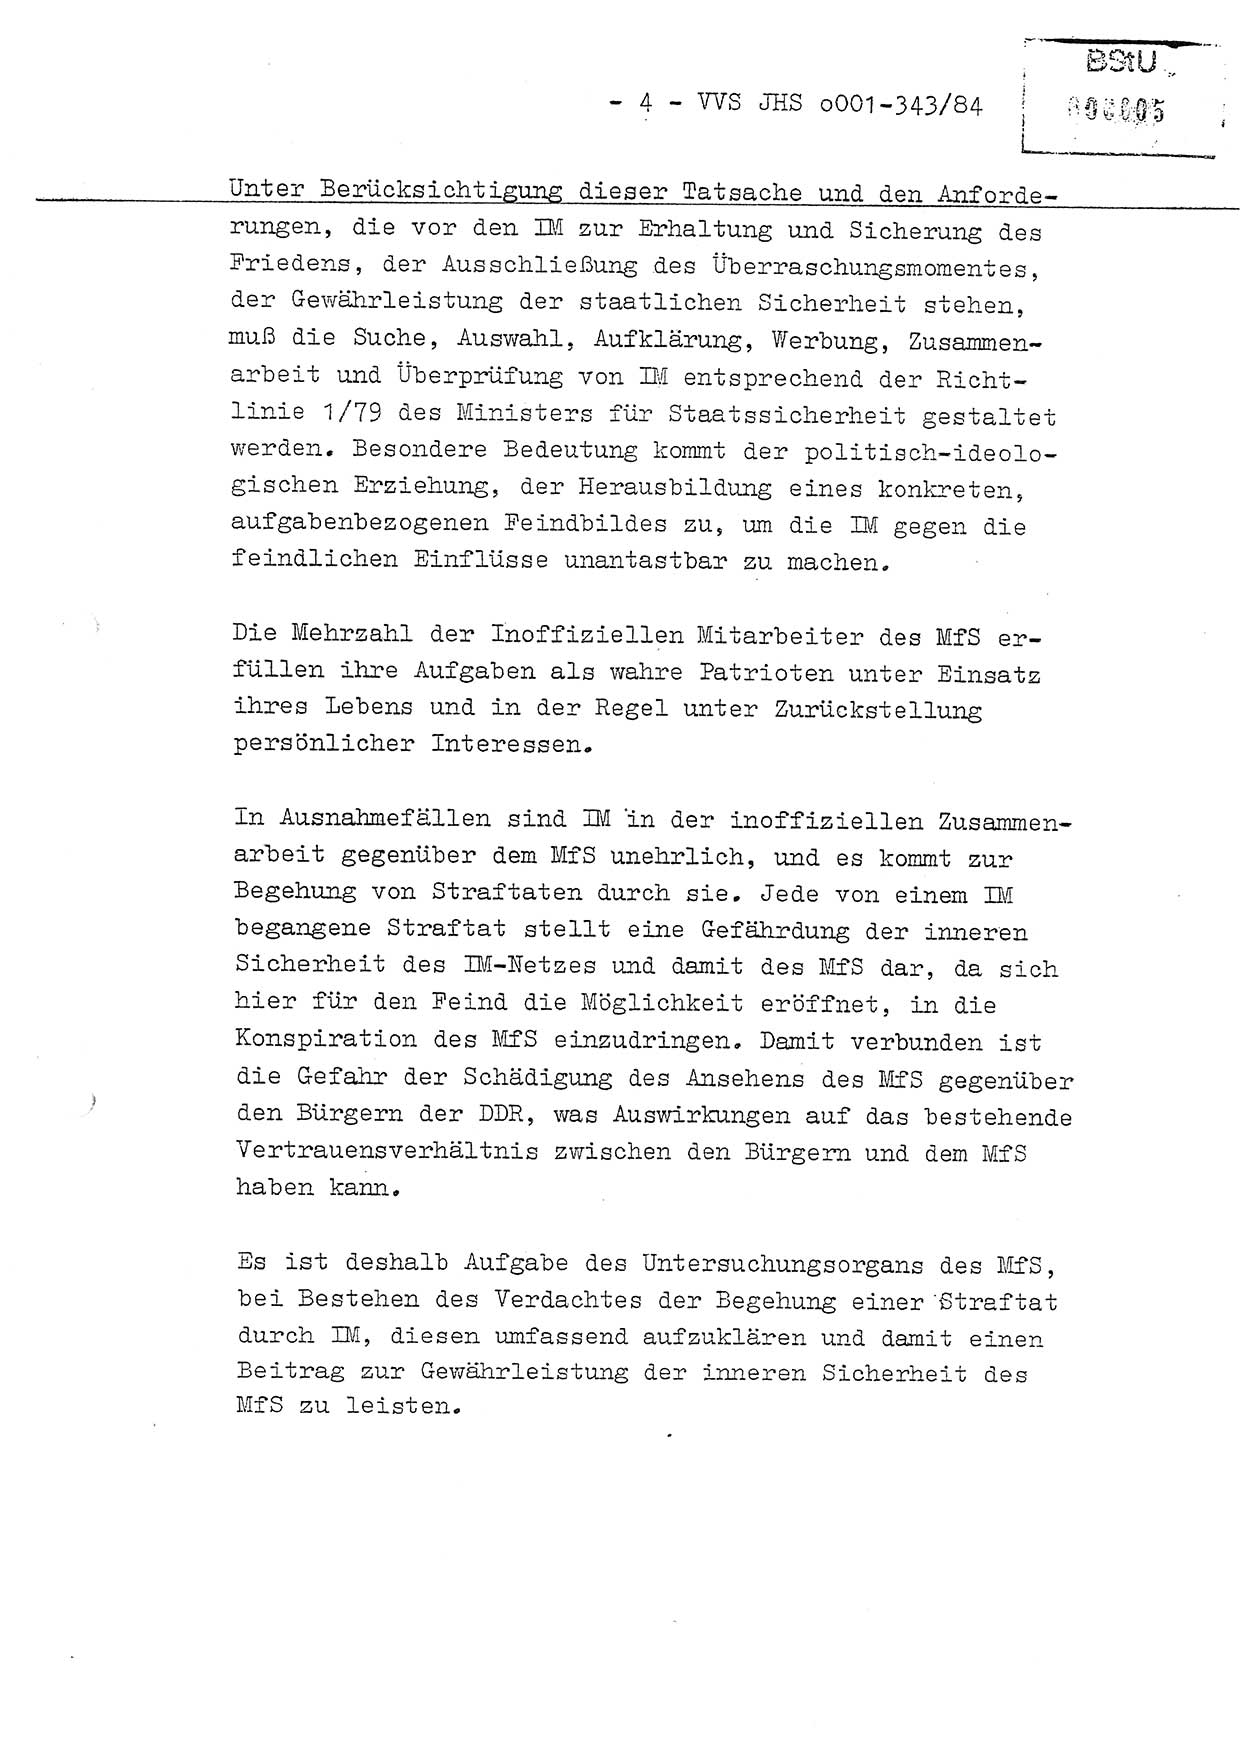 Diplomarbeit, Oberleutnant Bernd Michael (HA Ⅸ/5), Oberleutnant Peter Felber (HA IX/5), Ministerium für Staatssicherheit (MfS) [Deutsche Demokratische Republik (DDR)], Juristische Hochschule (JHS), Vertrauliche Verschlußsache (VVS) o001-343/84, Potsdam 1985, Seite 4 (Dipl.-Arb. MfS DDR JHS VVS o001-343/84 1985, S. 4)